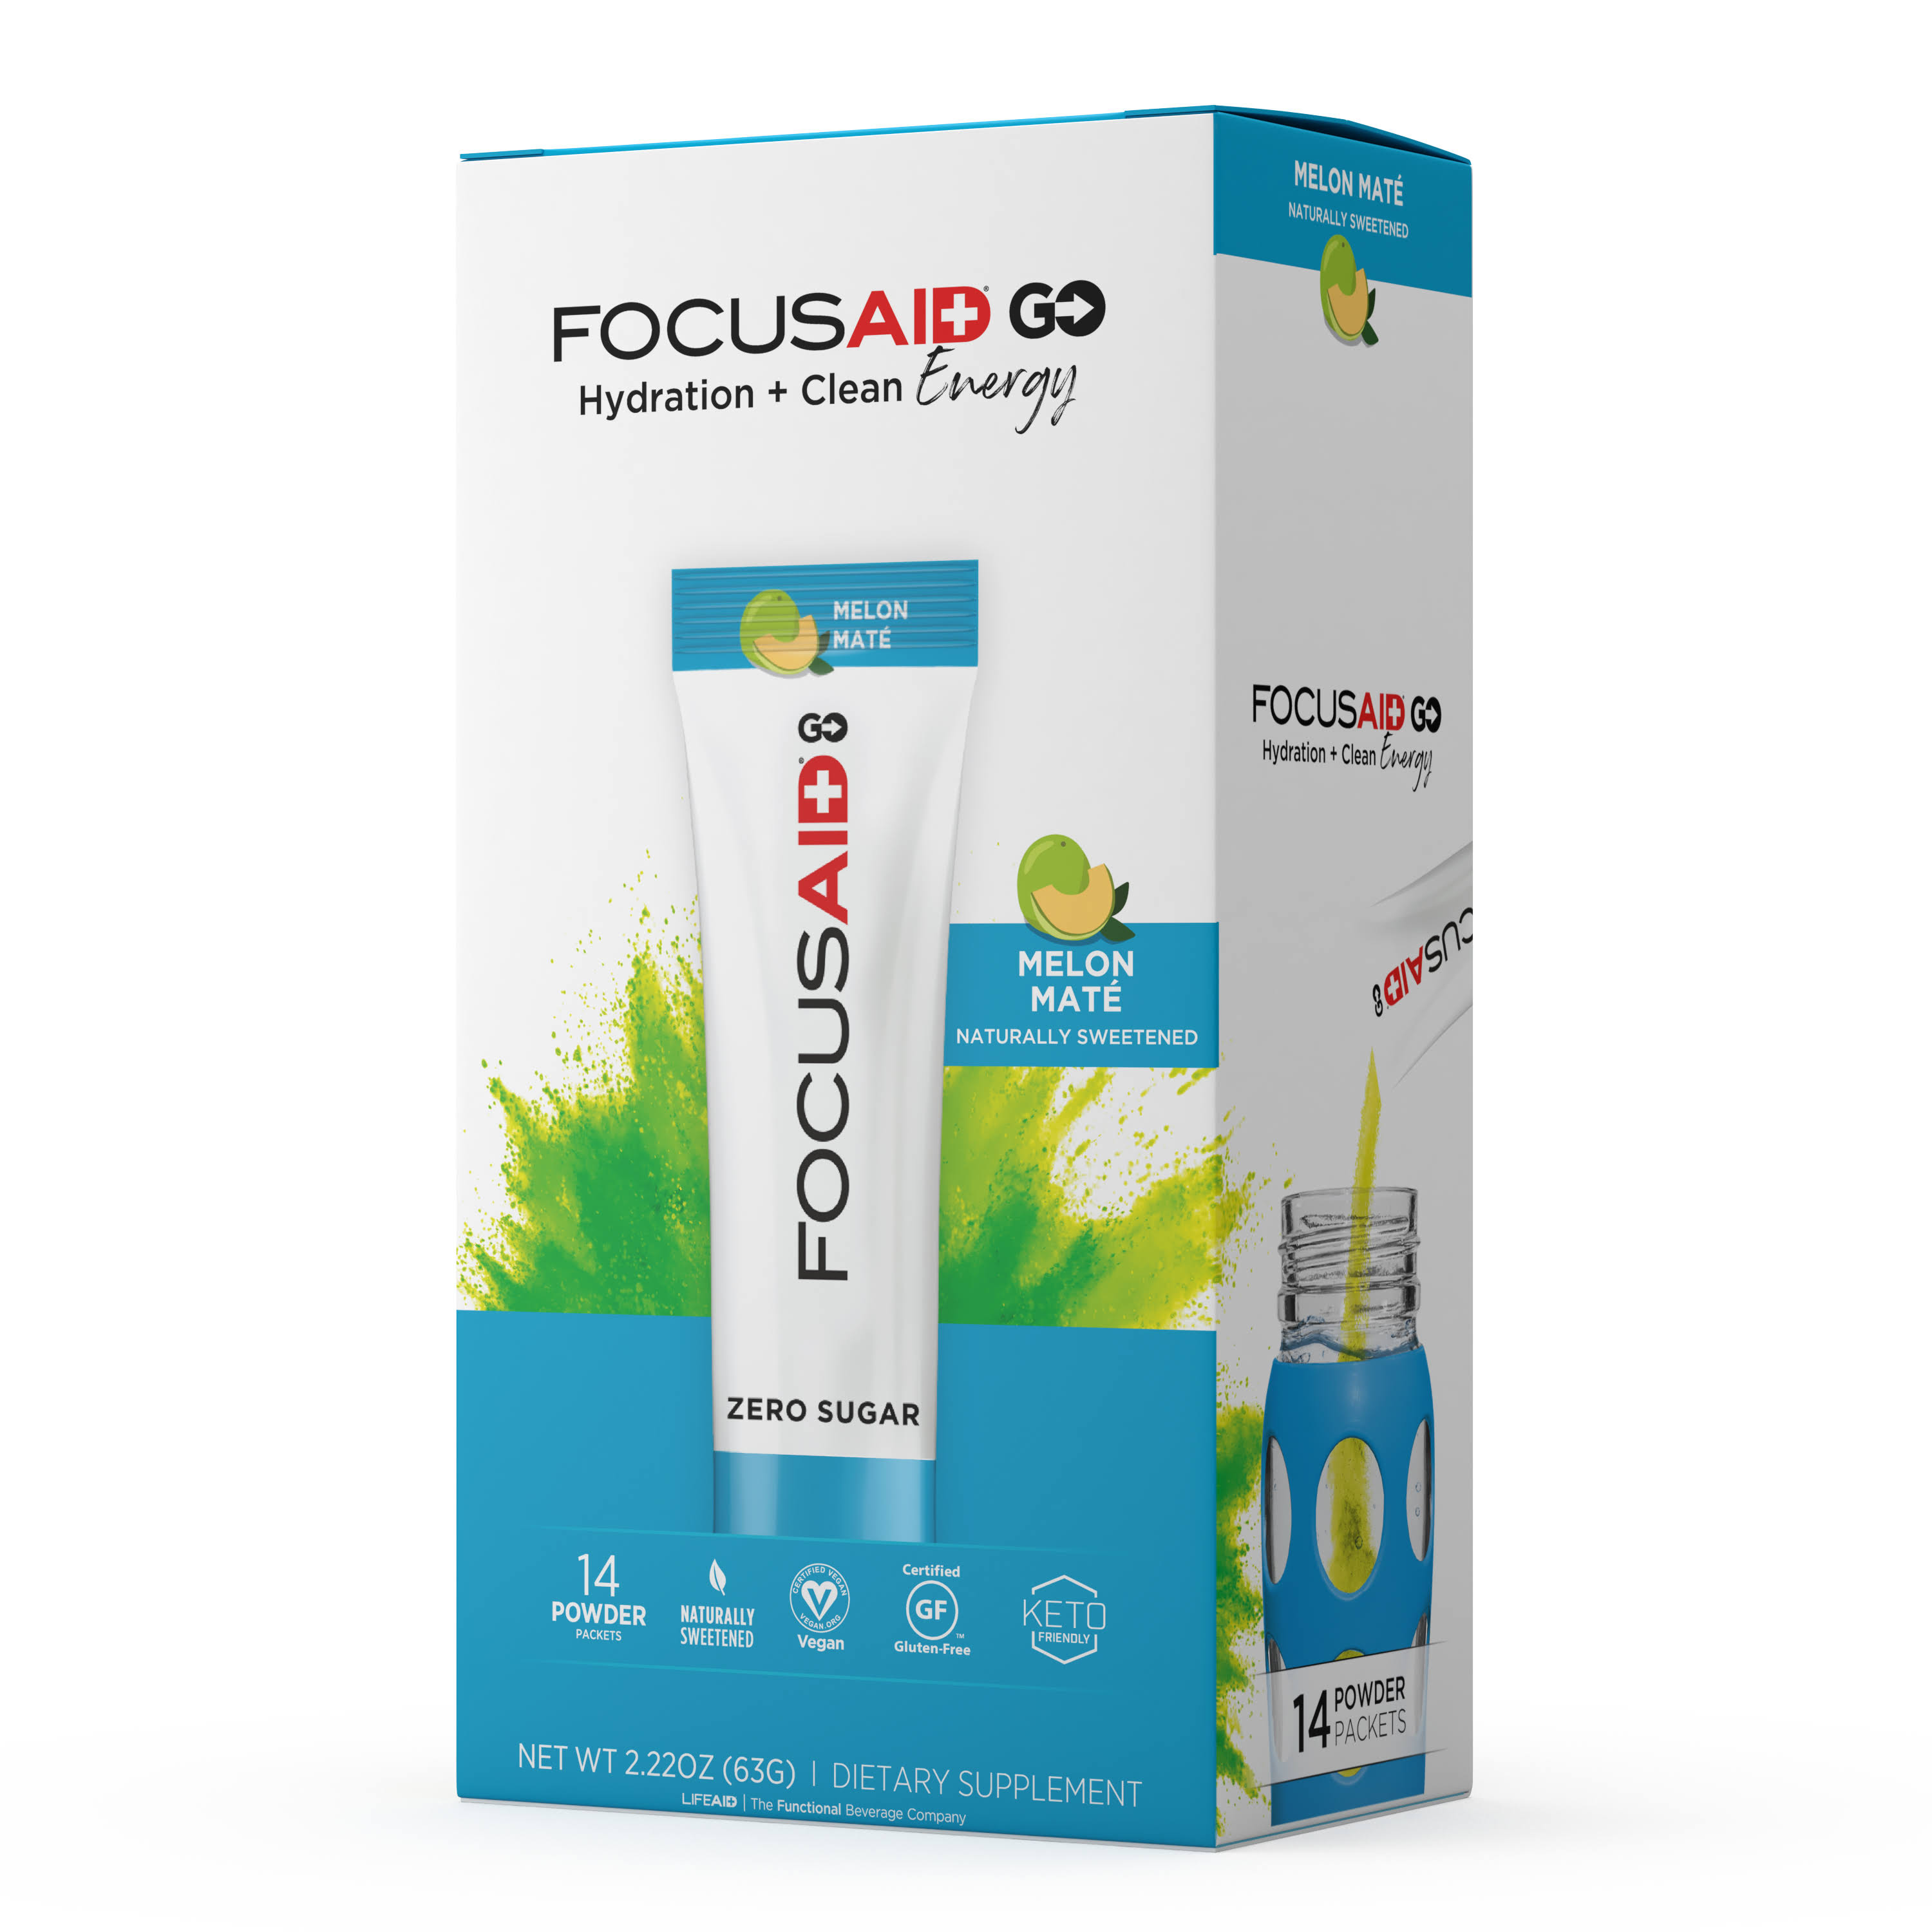 Focusaid Go Hydration + Clean Energy, Zero Sugar, Melon Mate, Powder Packets - 14 powder packets, 2.22 oz